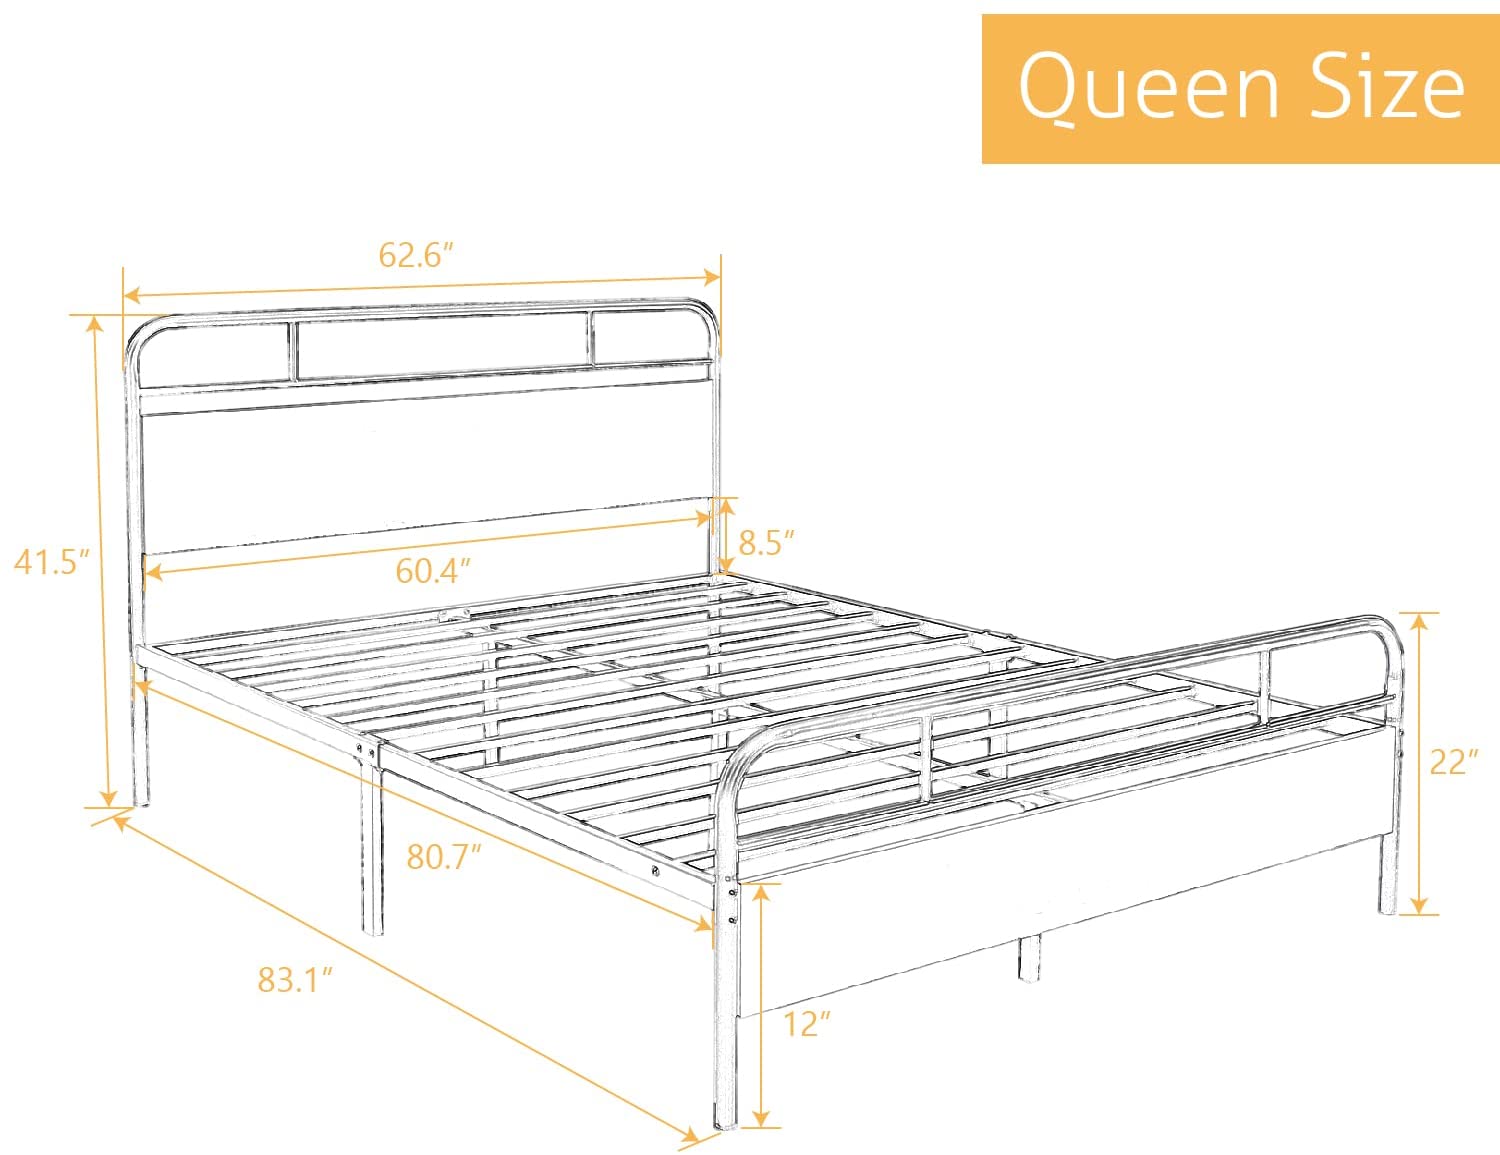 Sha Cerlin Light Brown Queen Size Metal Platform Bed Frame with Industrial Heavy Duty Wooden Headboard - image 5 of 10